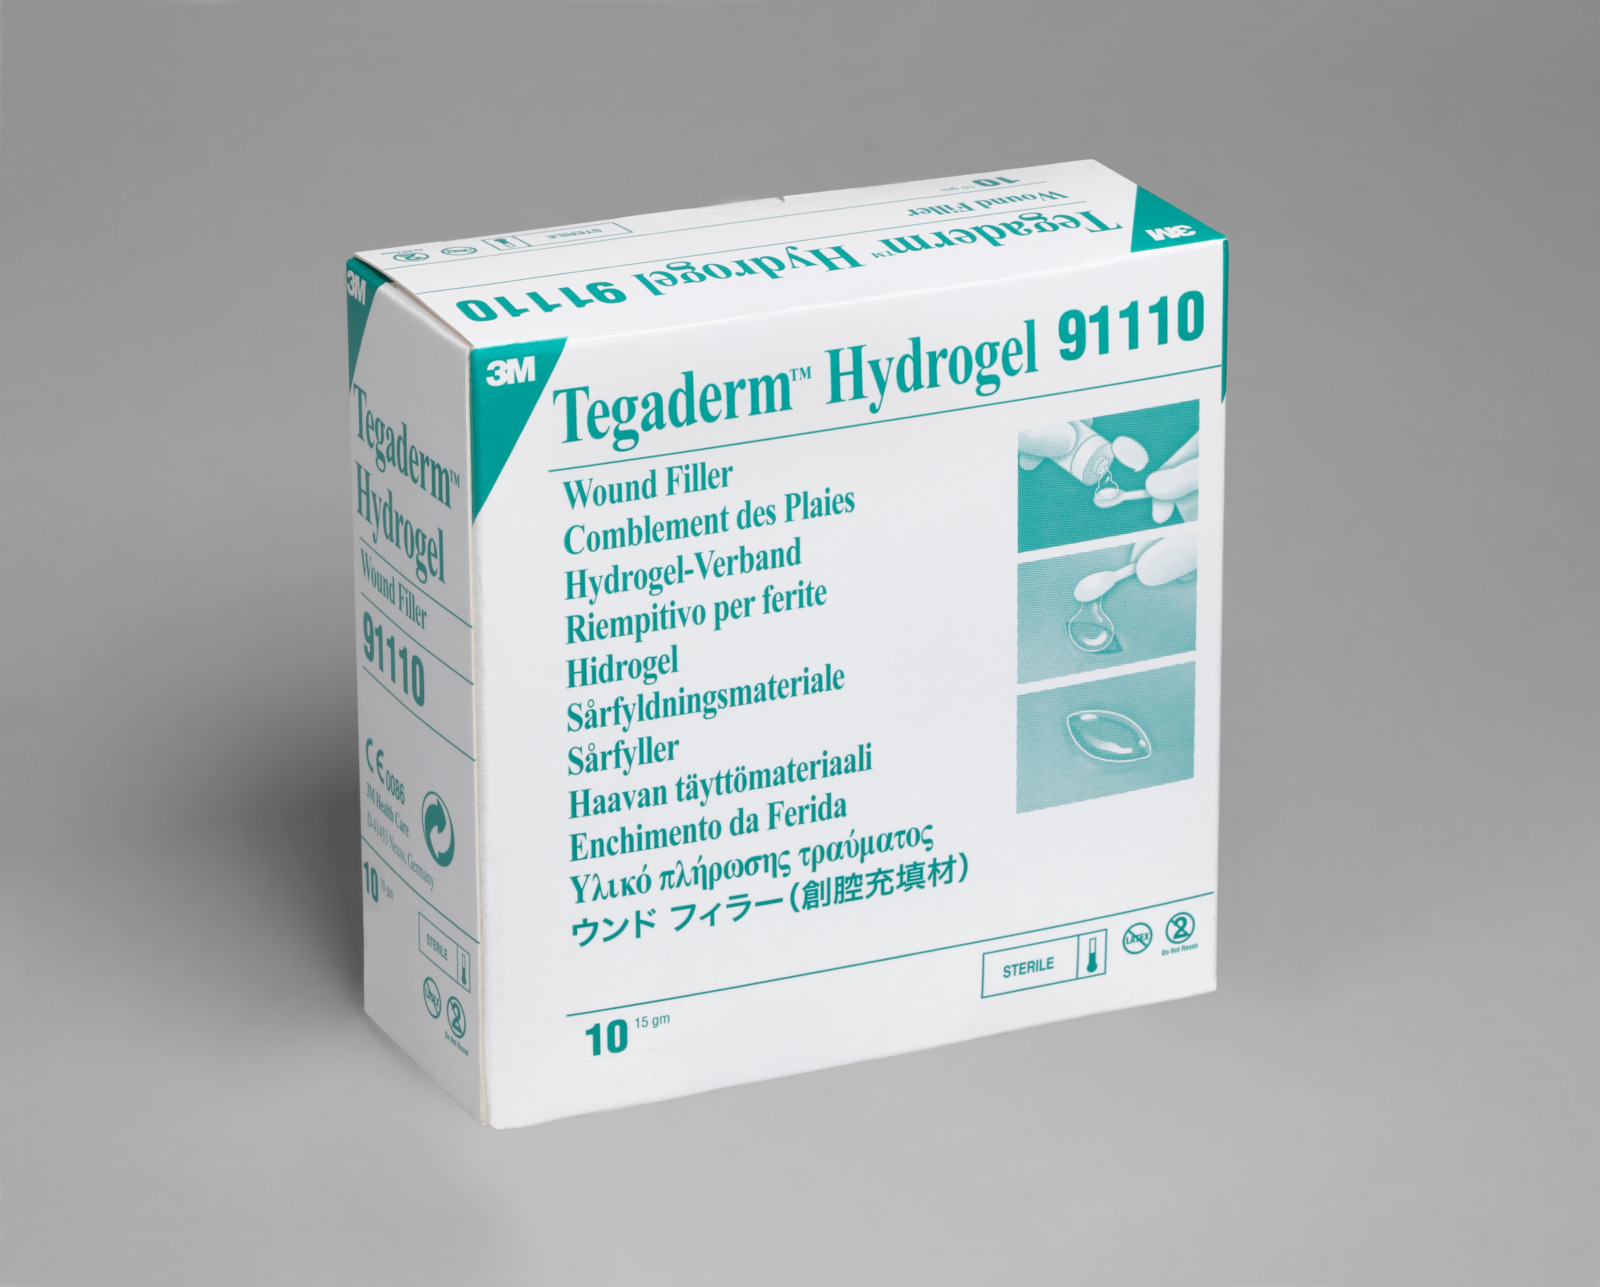 3M™ Tegaderm™ Hydrogel, 91110, 10 / Packung